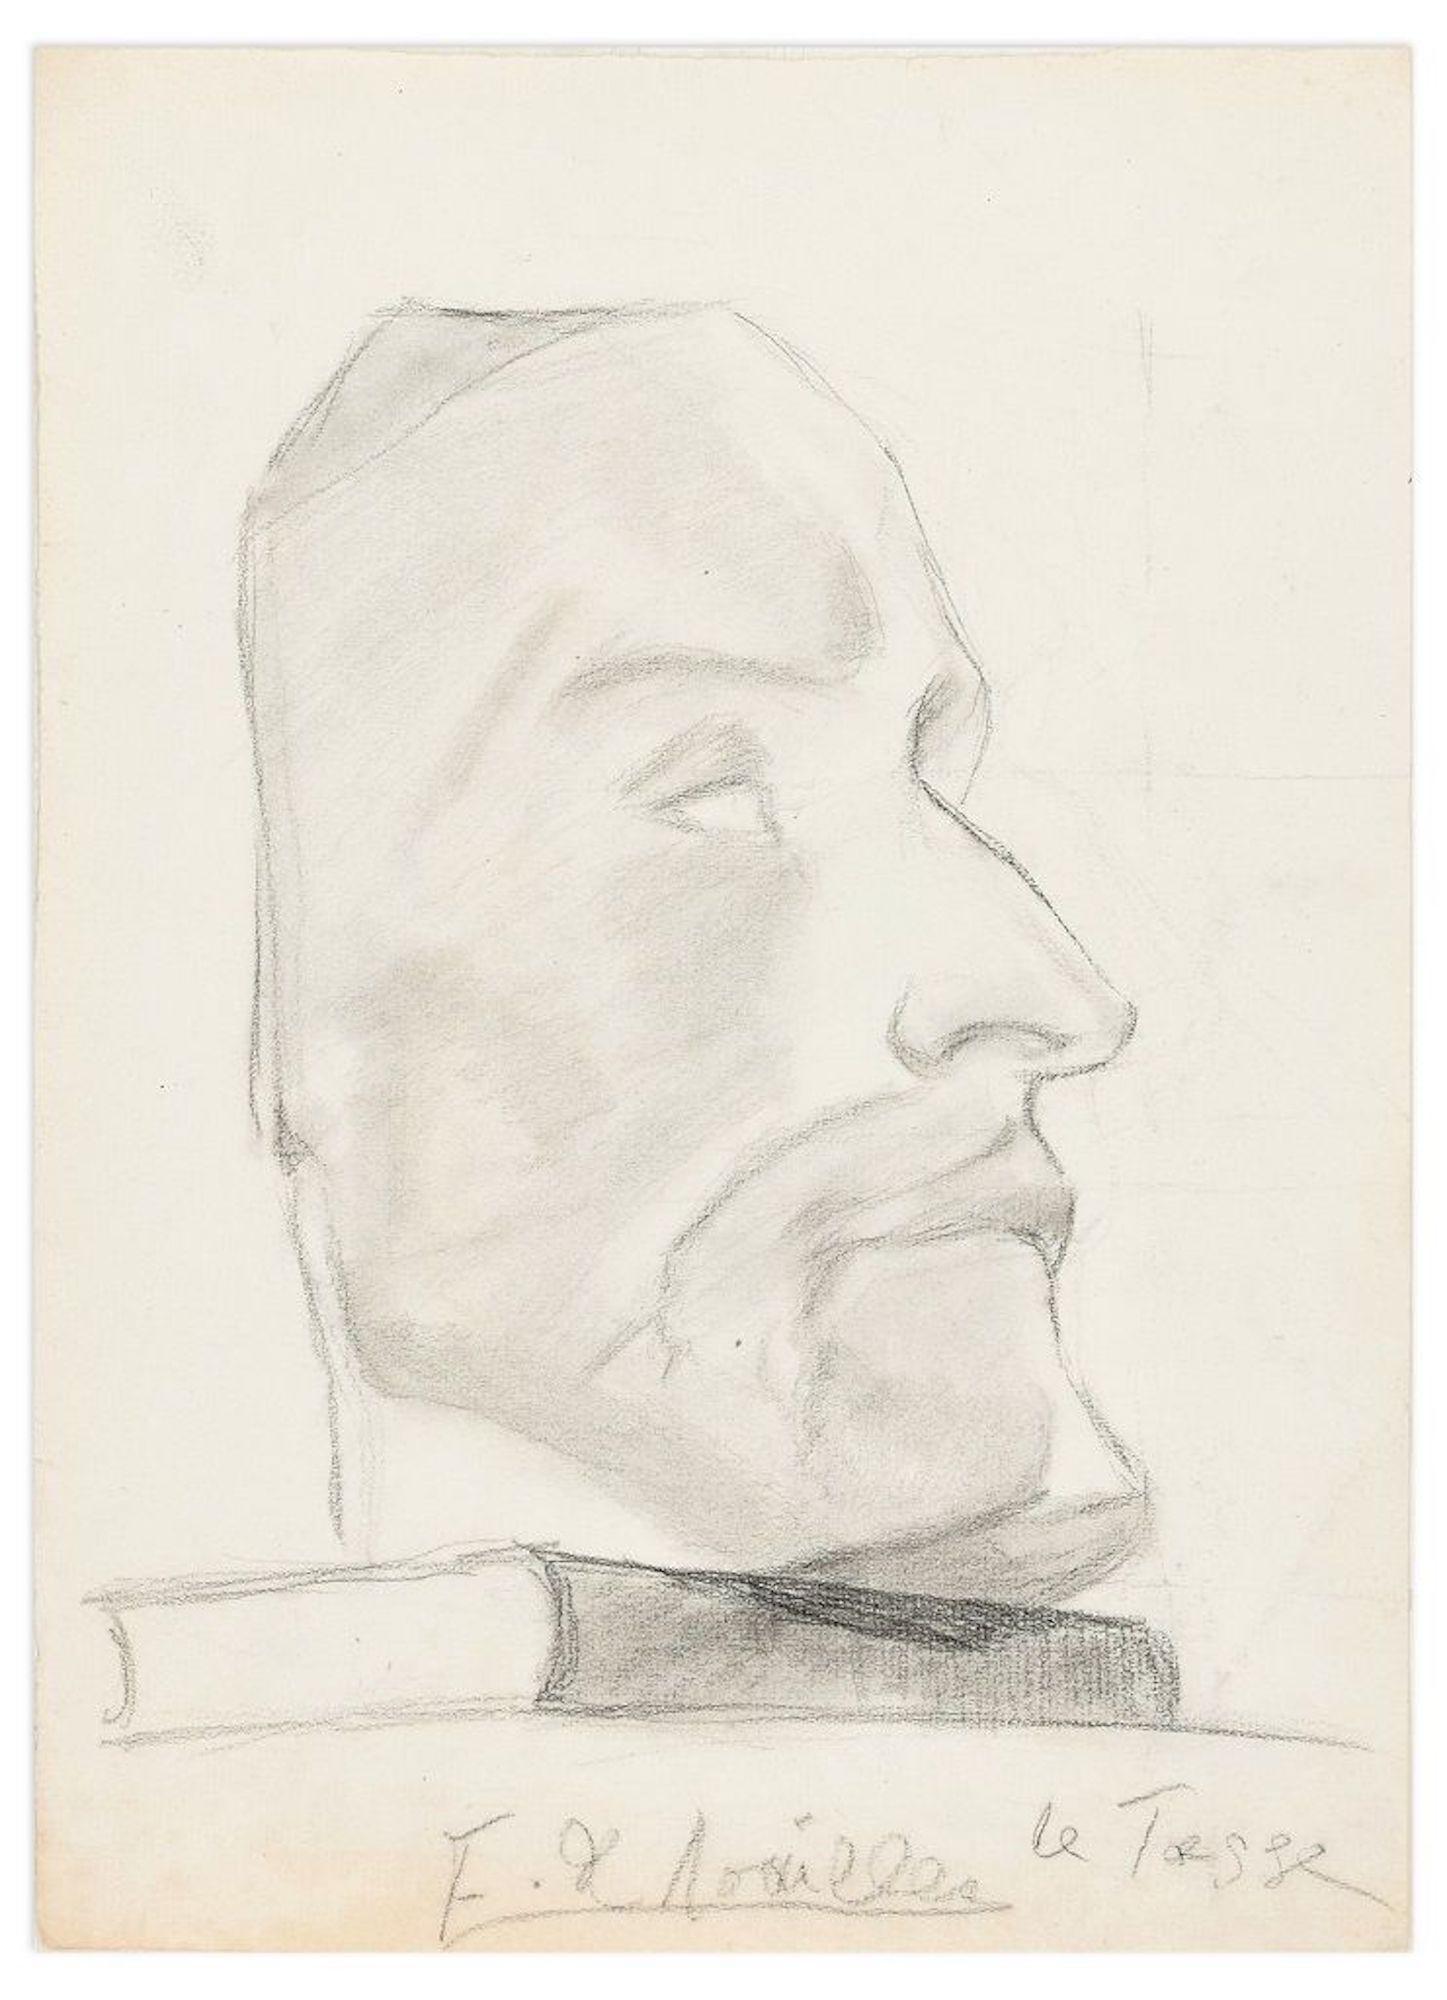 Anna Elisabeth de Noaille Figurative Art - Male Profile - Original Pencil Drawing by A. E. de Noailles - Early 20th Century